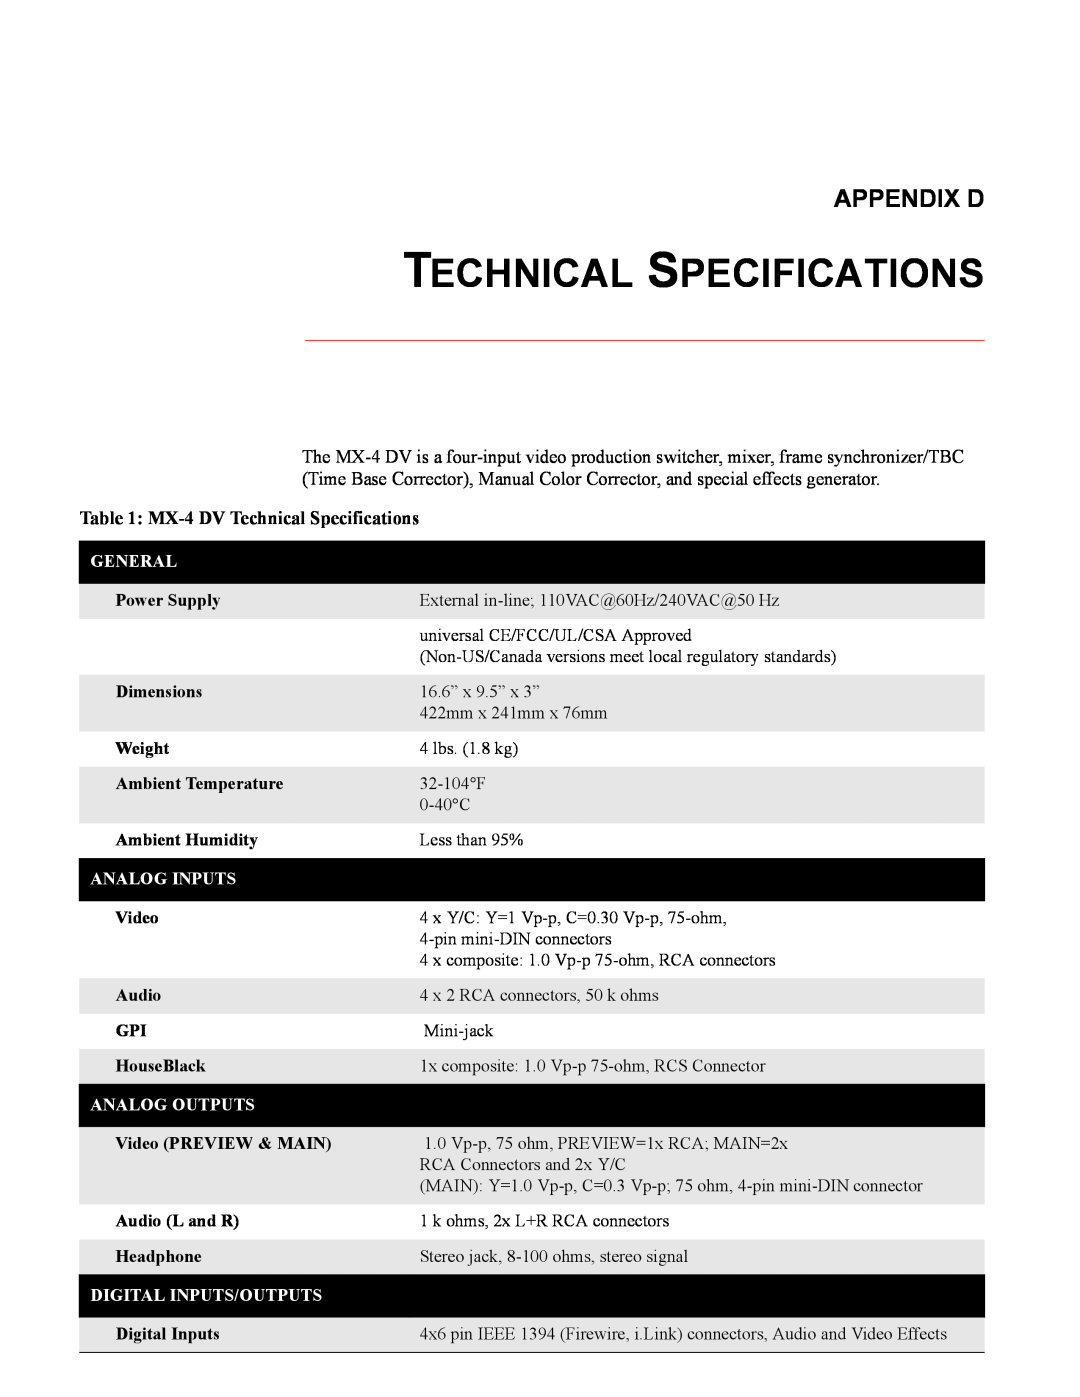 FOCUS Enhancements MX-4DV Appendix D, MX-4 DV Technical Specifications, General, Power Supply, Dimensions, Weight 